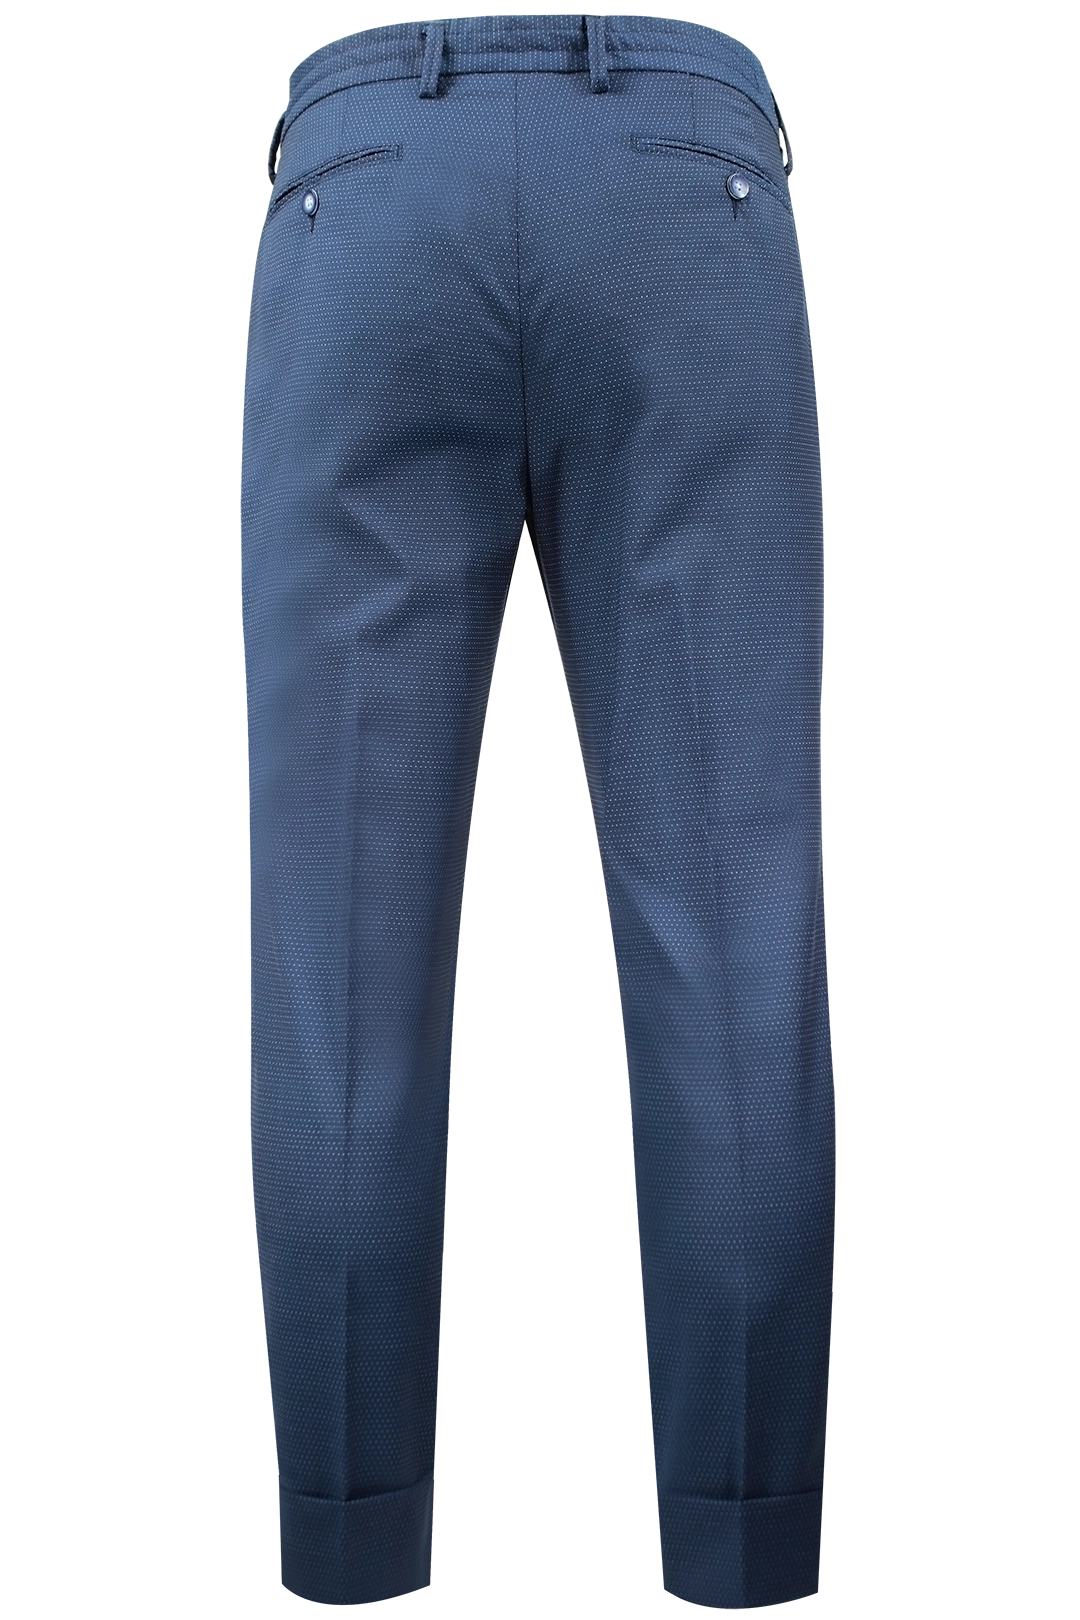 Pantalone pince coulisse lana blu micro pois bianchi retro